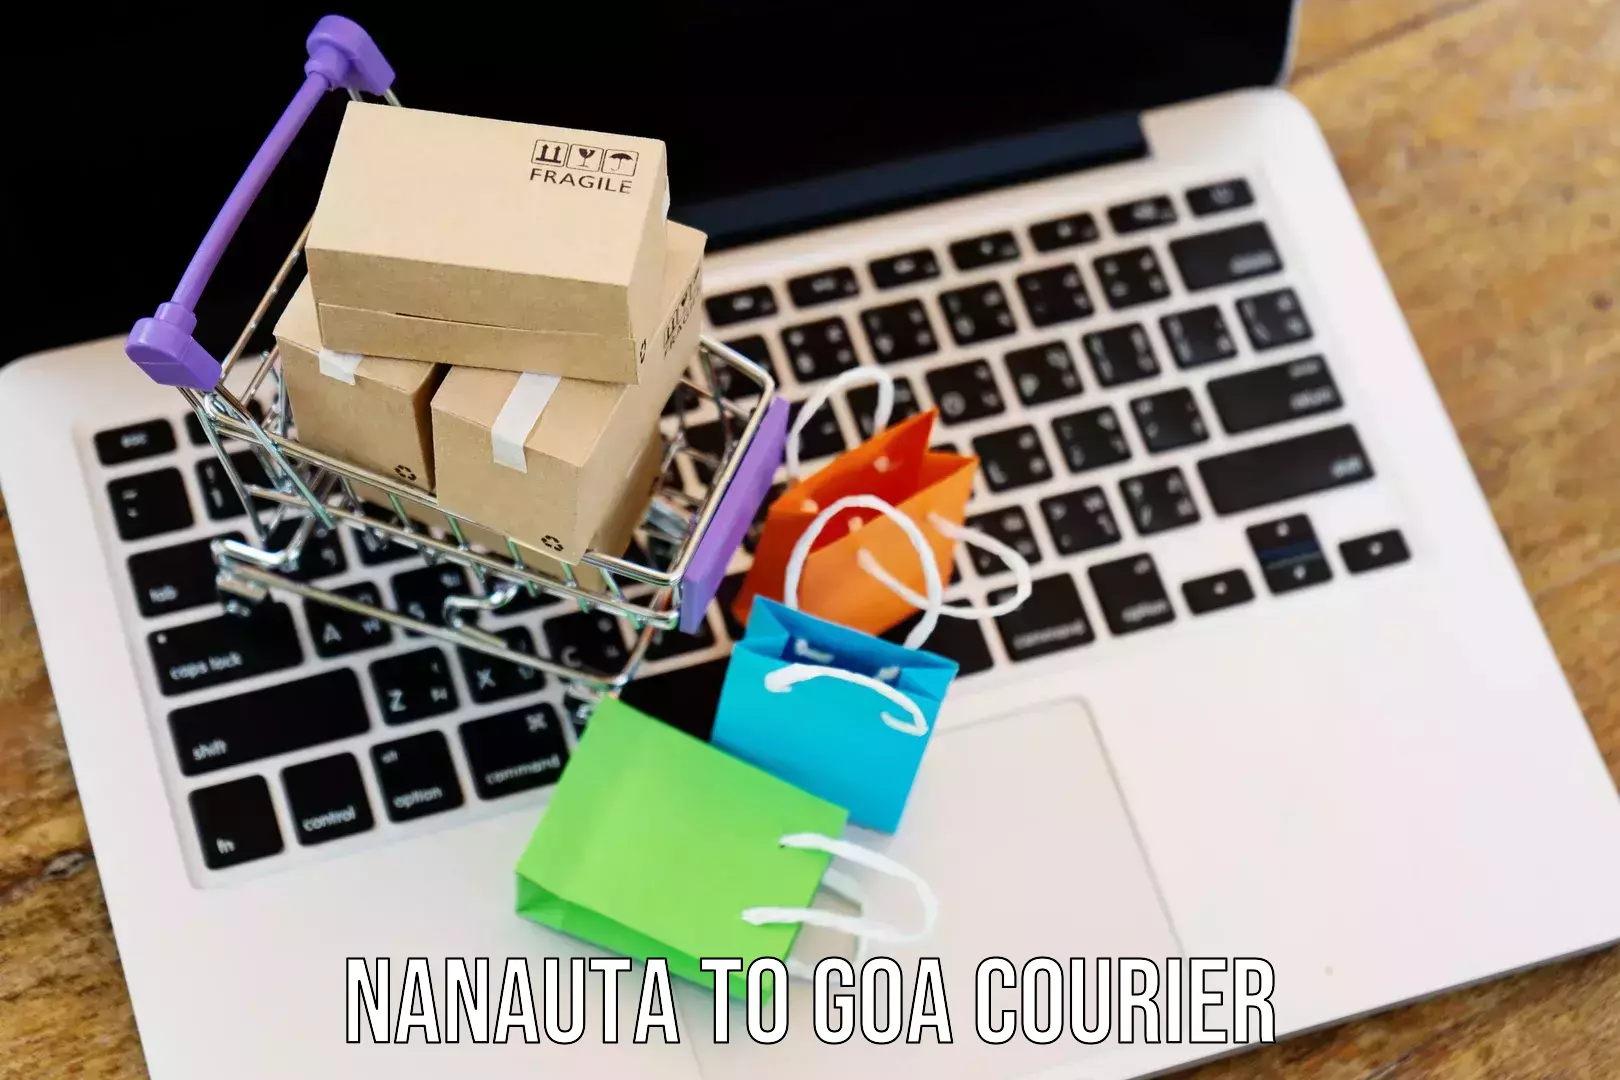 Local courier options Nanauta to IIT Goa